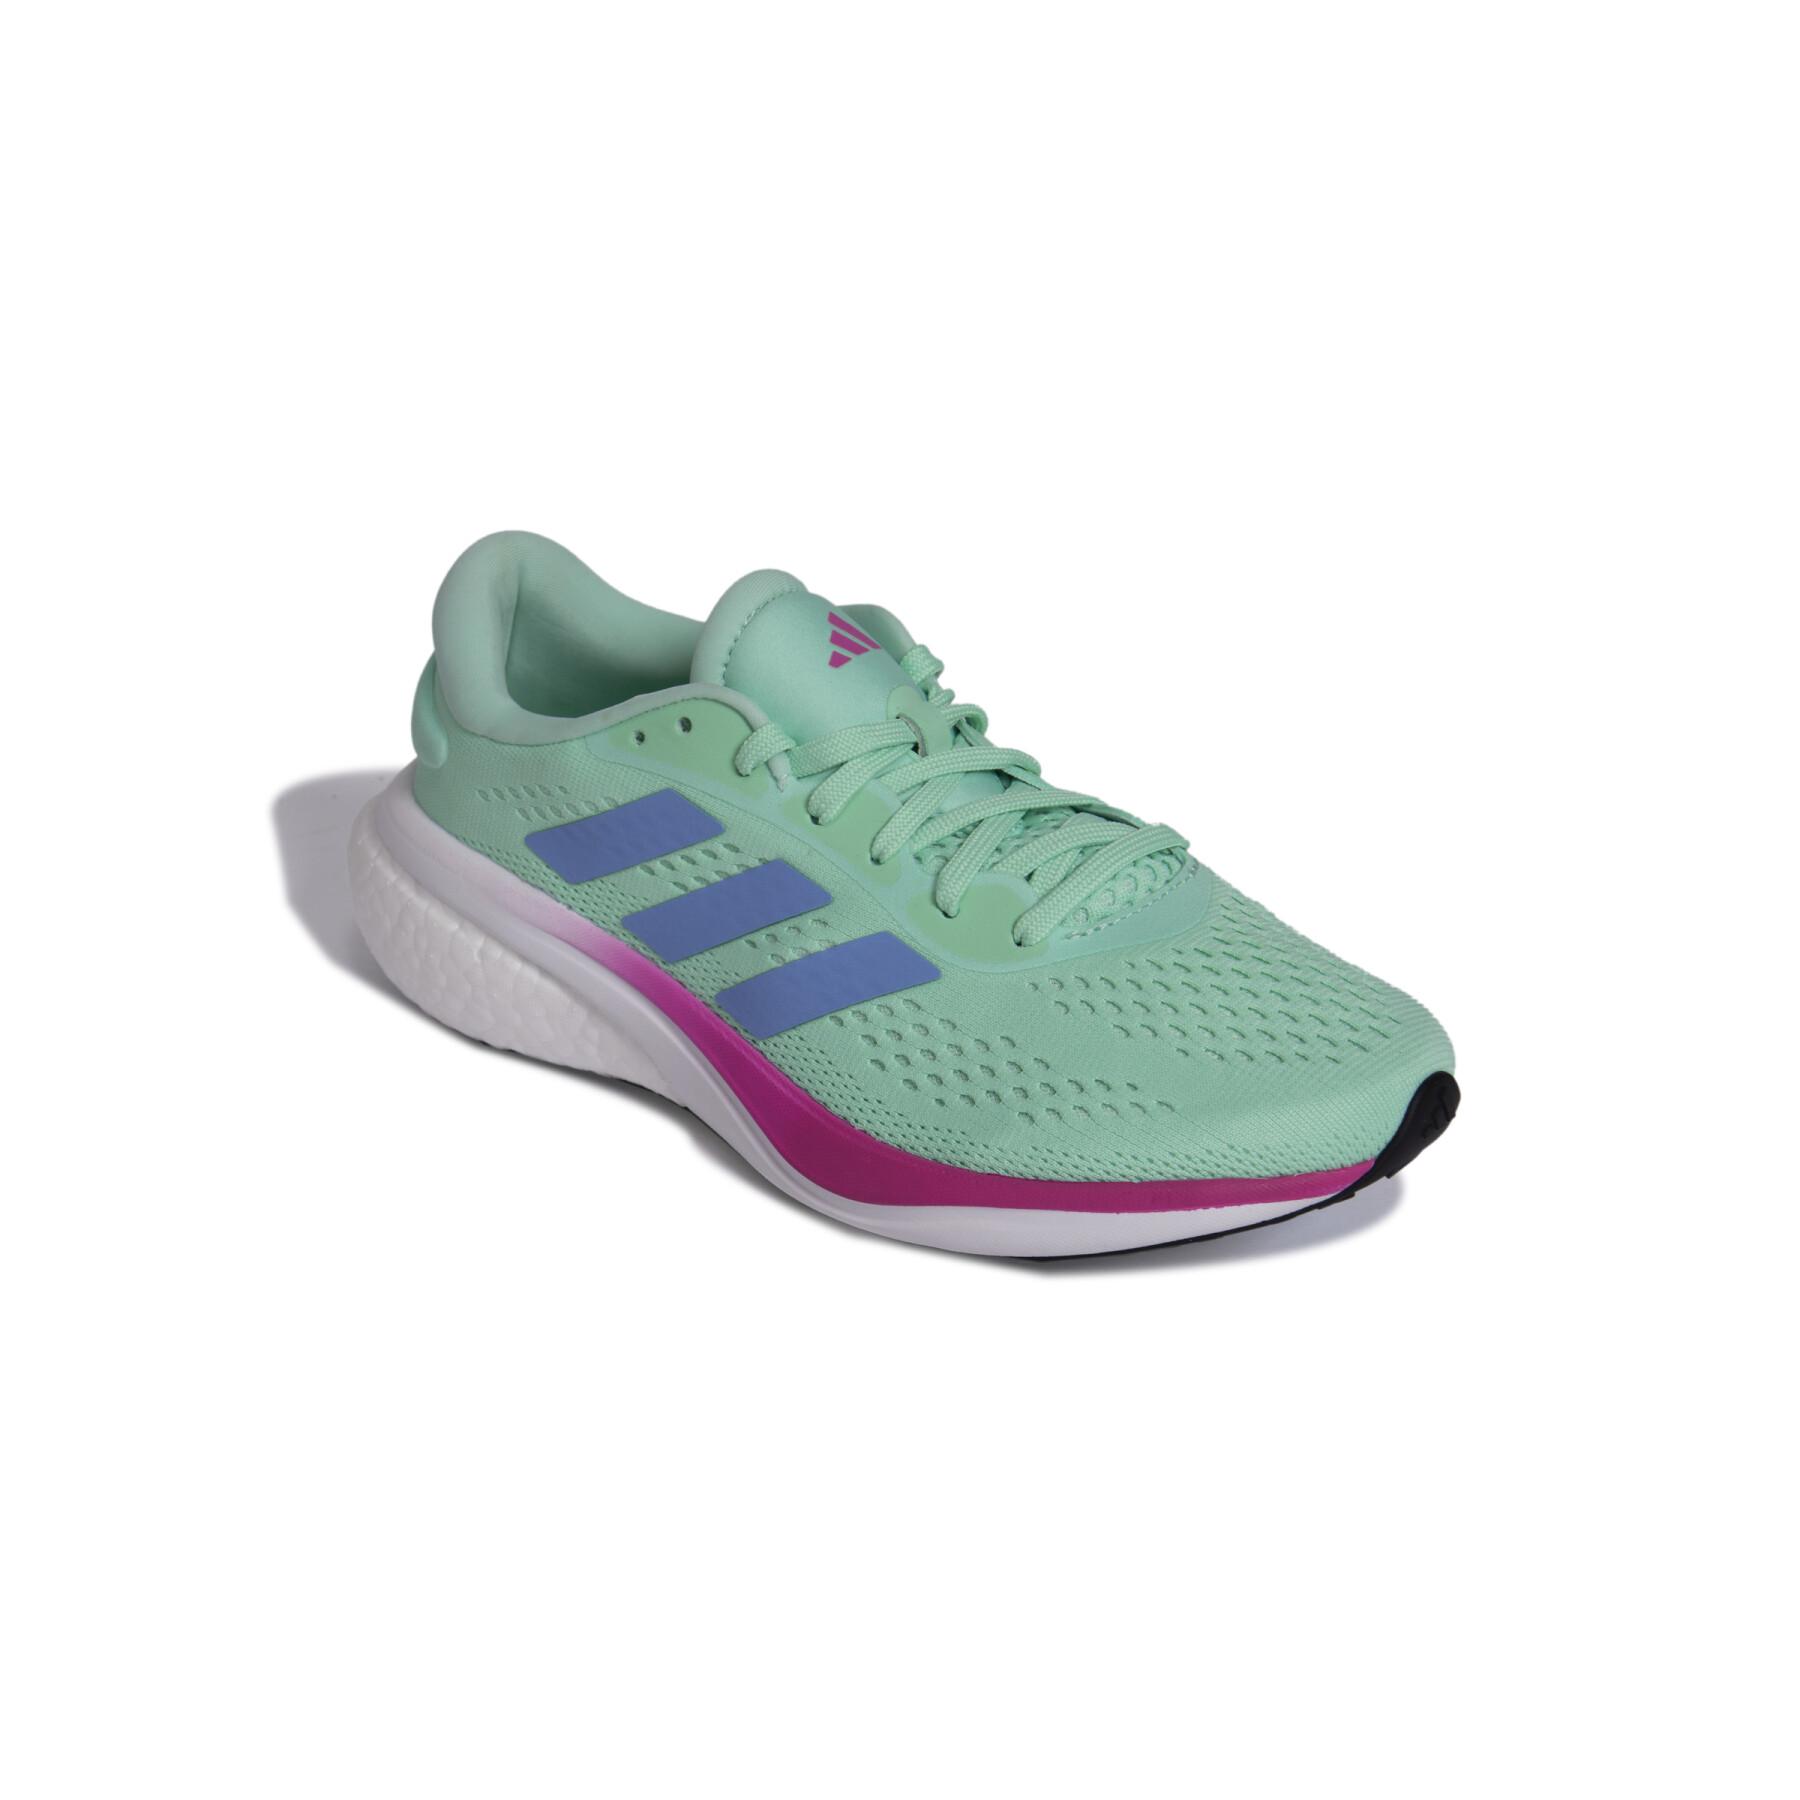 Women's running shoes adidas Supernova 2.0